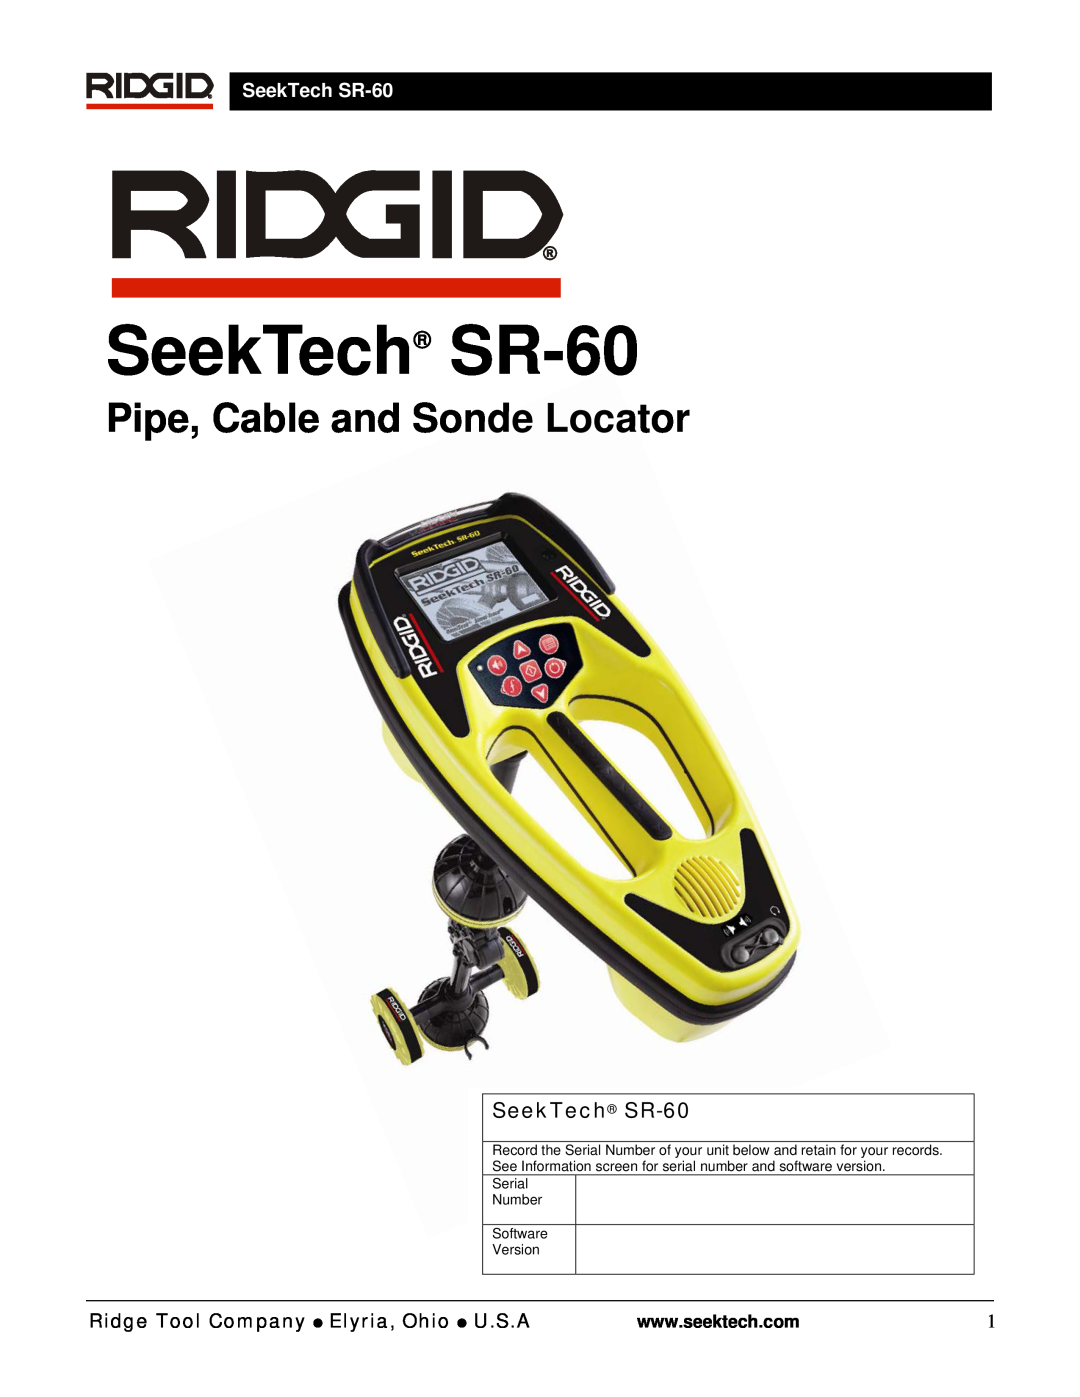 RIDGID manual SeekTech SR-60, Ridge Tool Company  Elyria, Ohio  U.S.A, Pipe, Cable and Sonde Locator 